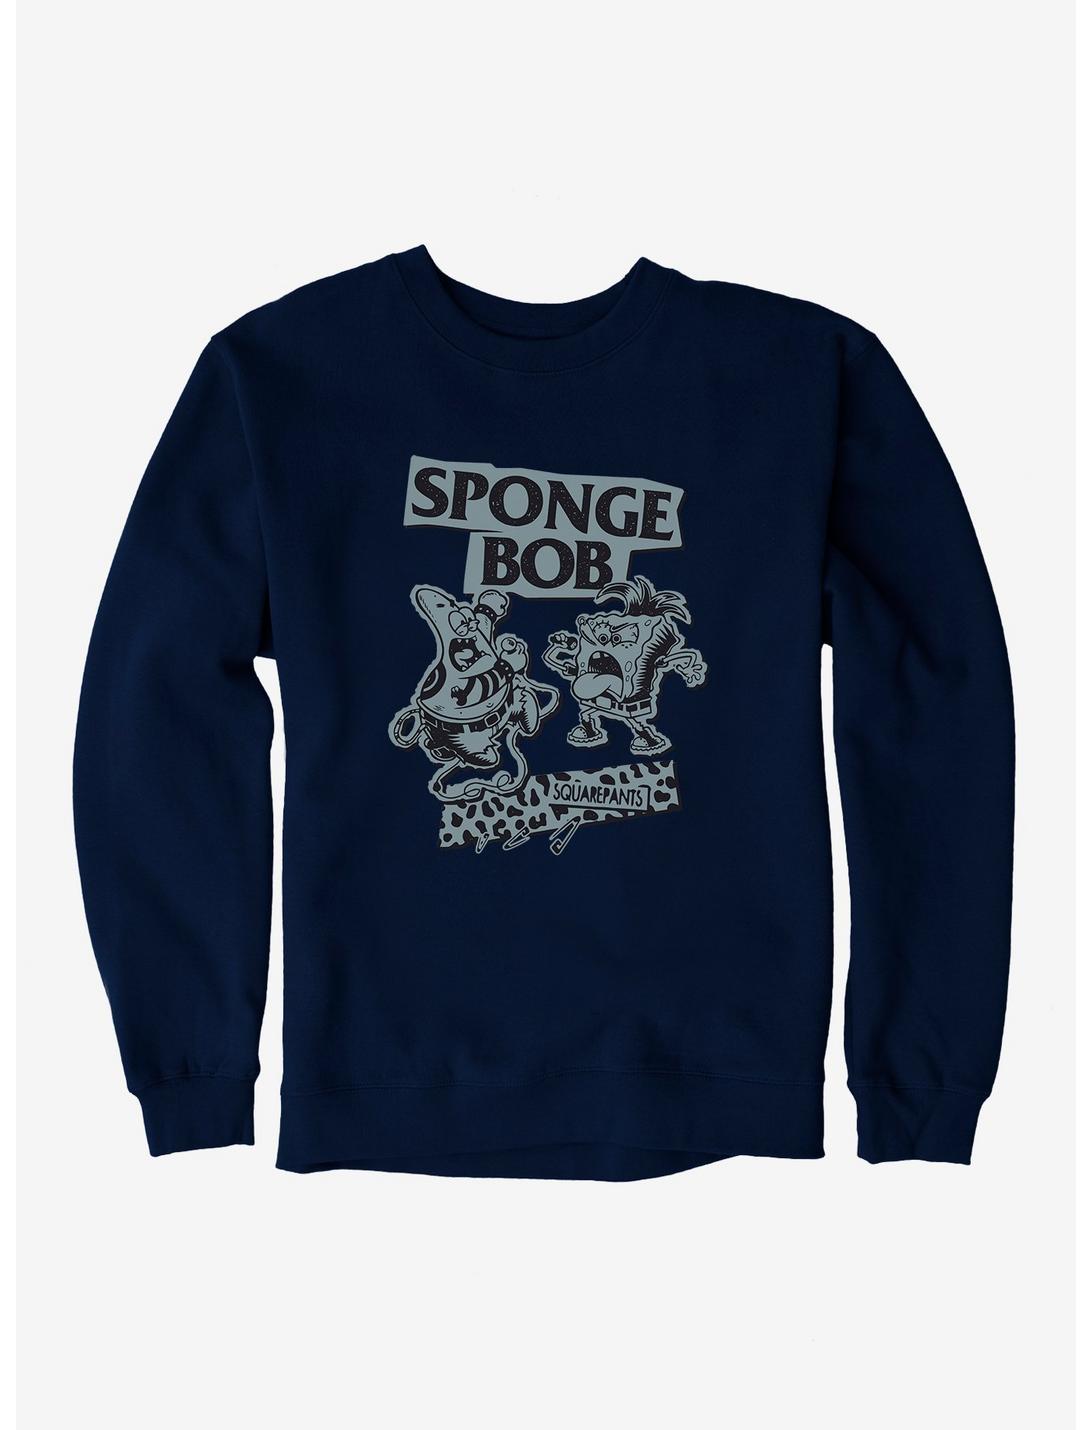 SpongeBob SquarePants Punk Band Sweatshirt, NAVY, hi-res